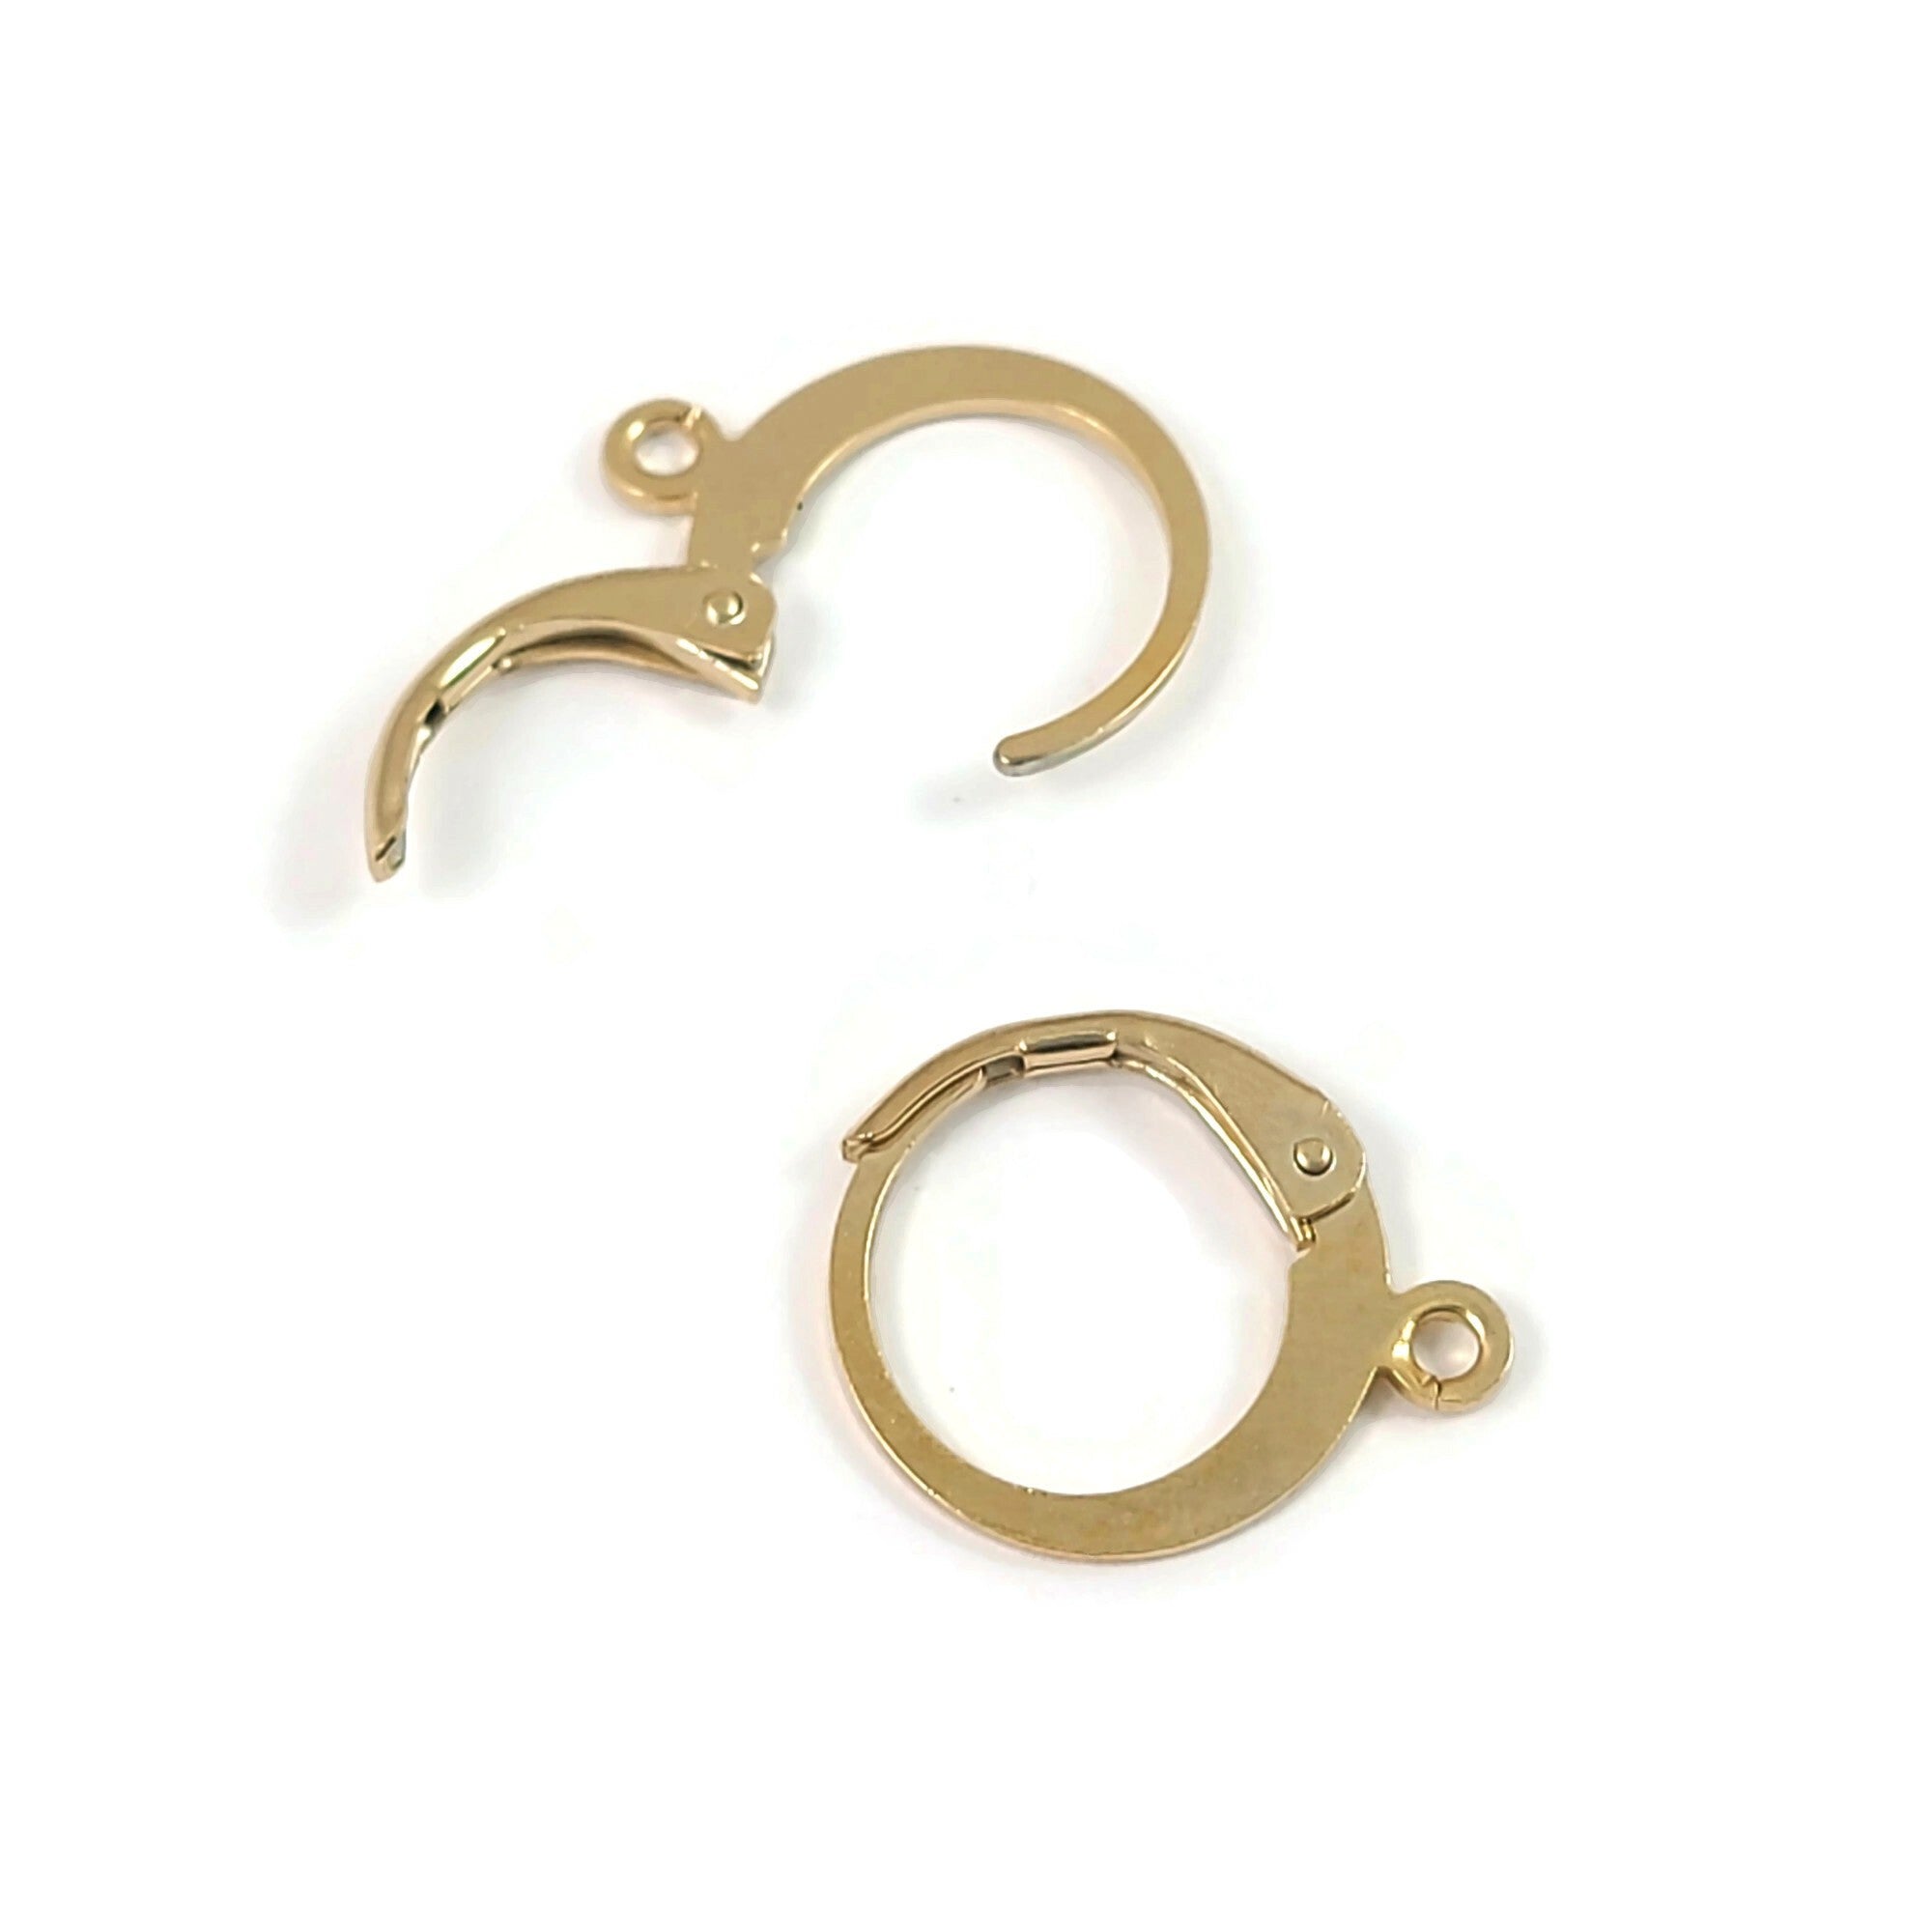 24K Gold plated round lever back, Stainless steel hoop earring hooks